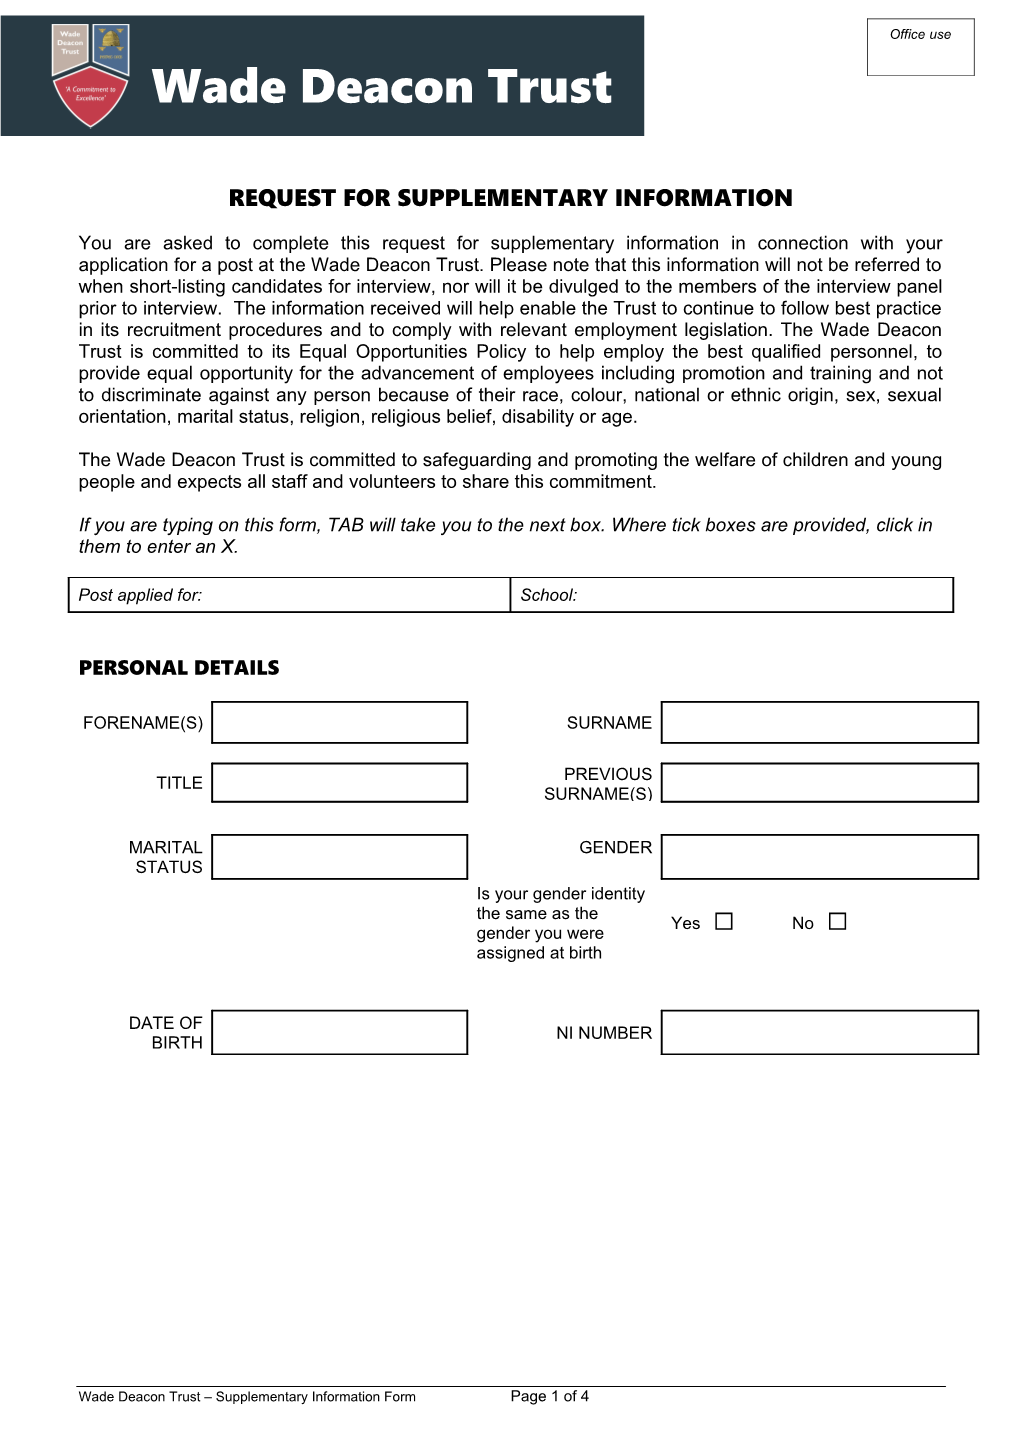 Wade Deacon High School Supplementary Information Form